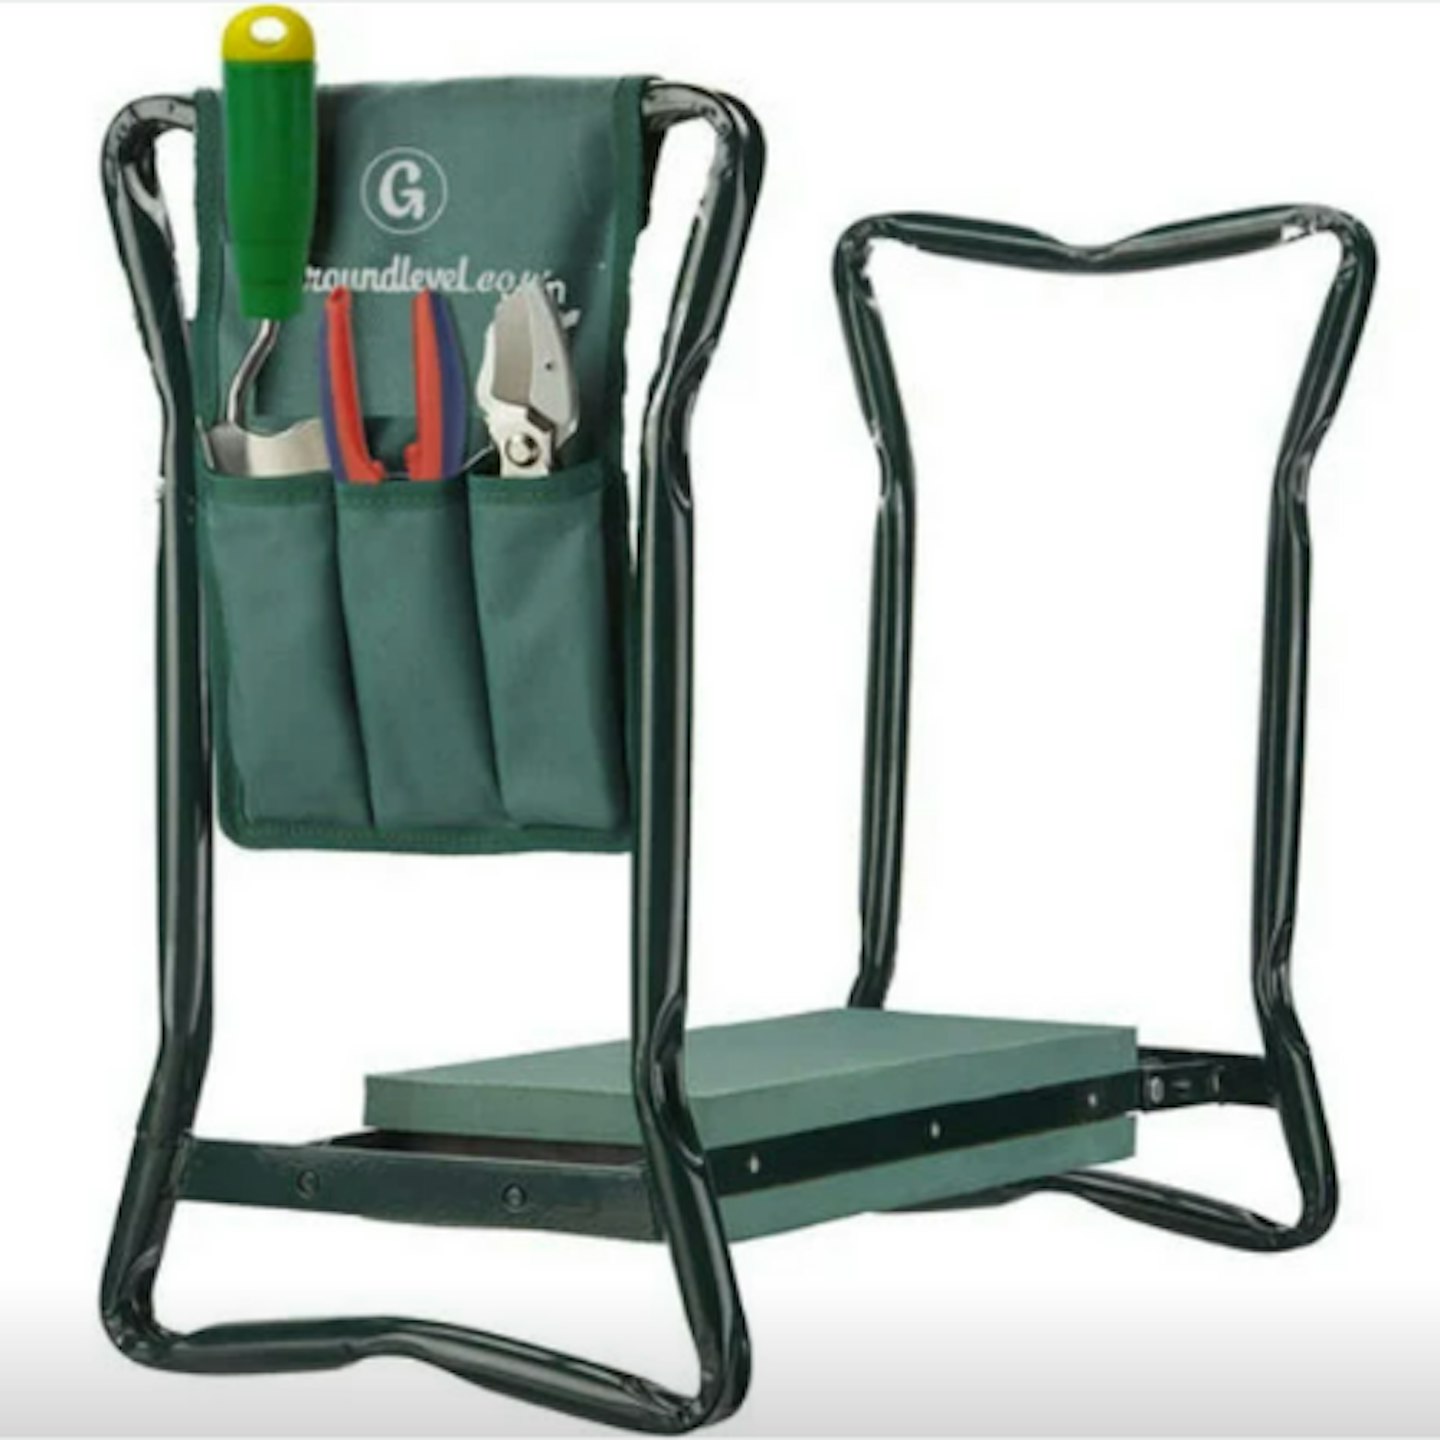 ManoMano Versatile Foldable Portable Garden Kneeler